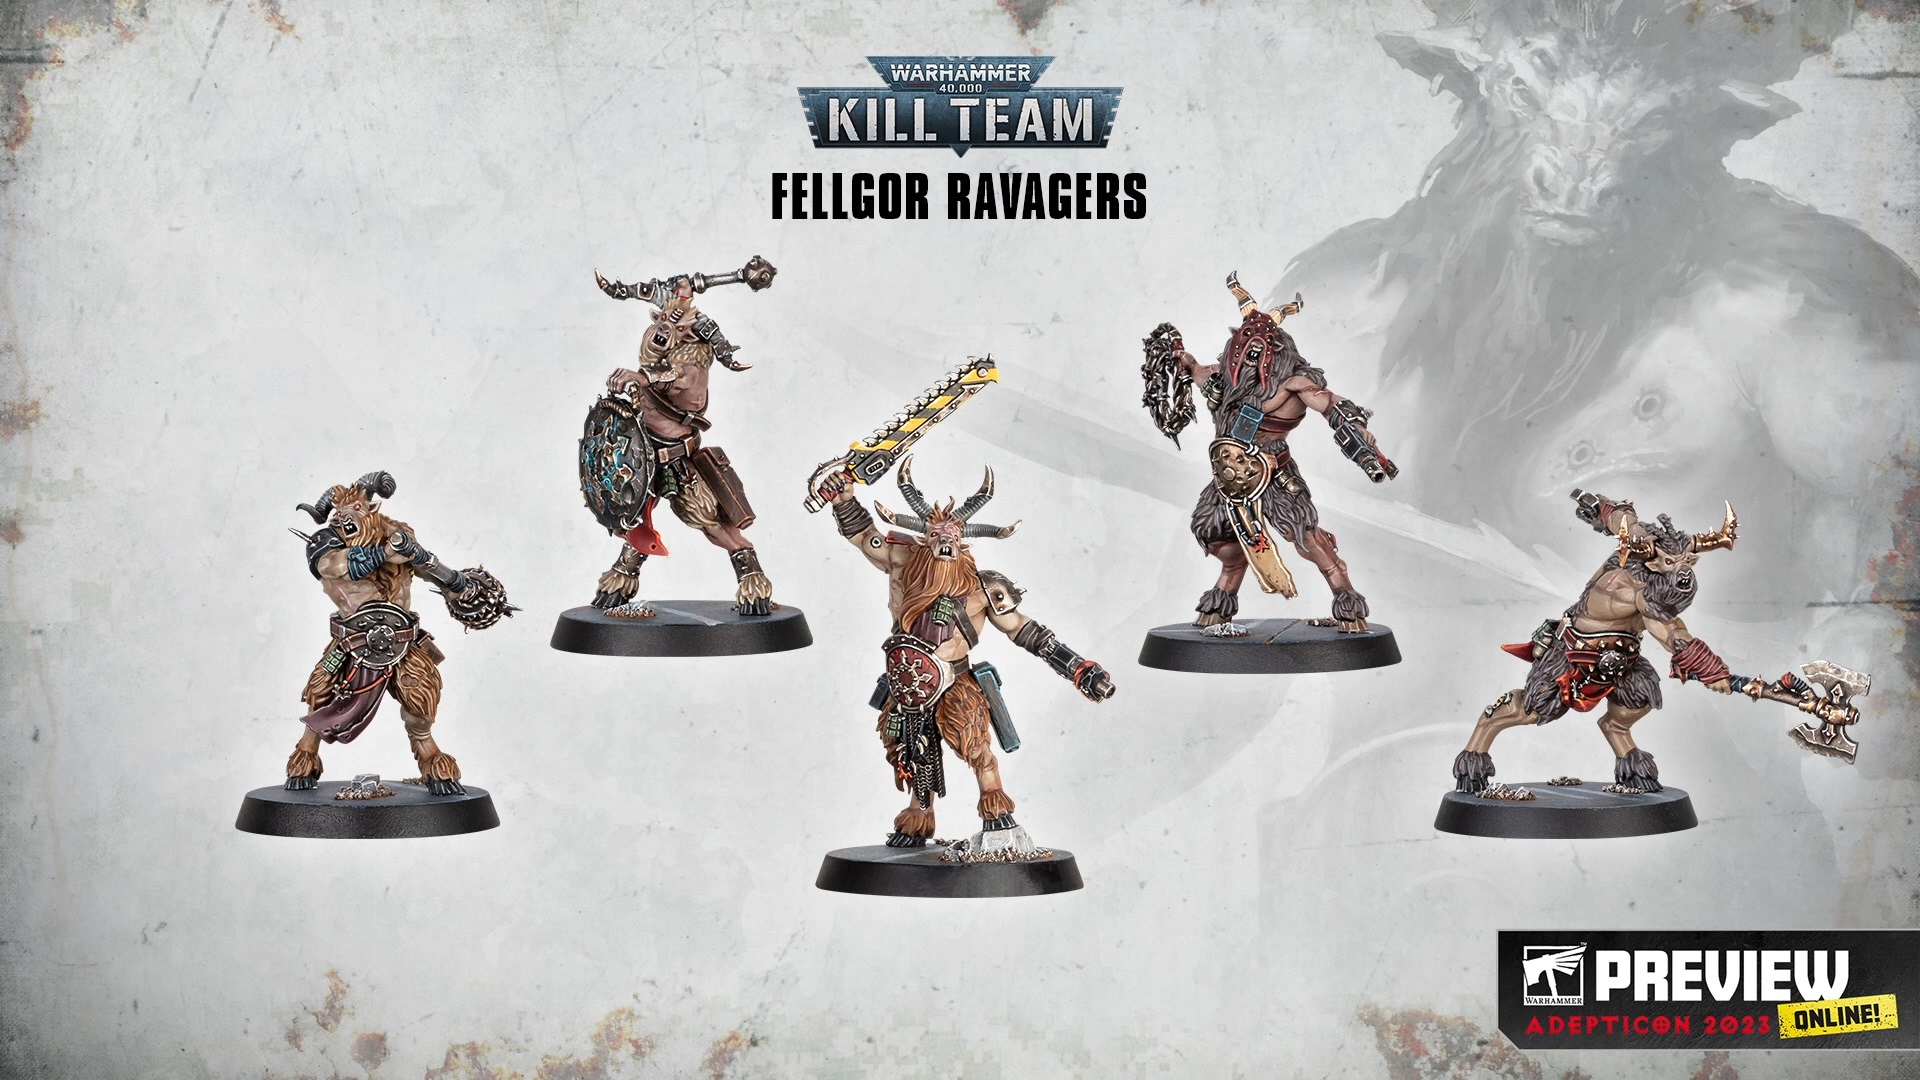 Fellgor Ravagers #1 - Warhammer 40K Kill Team